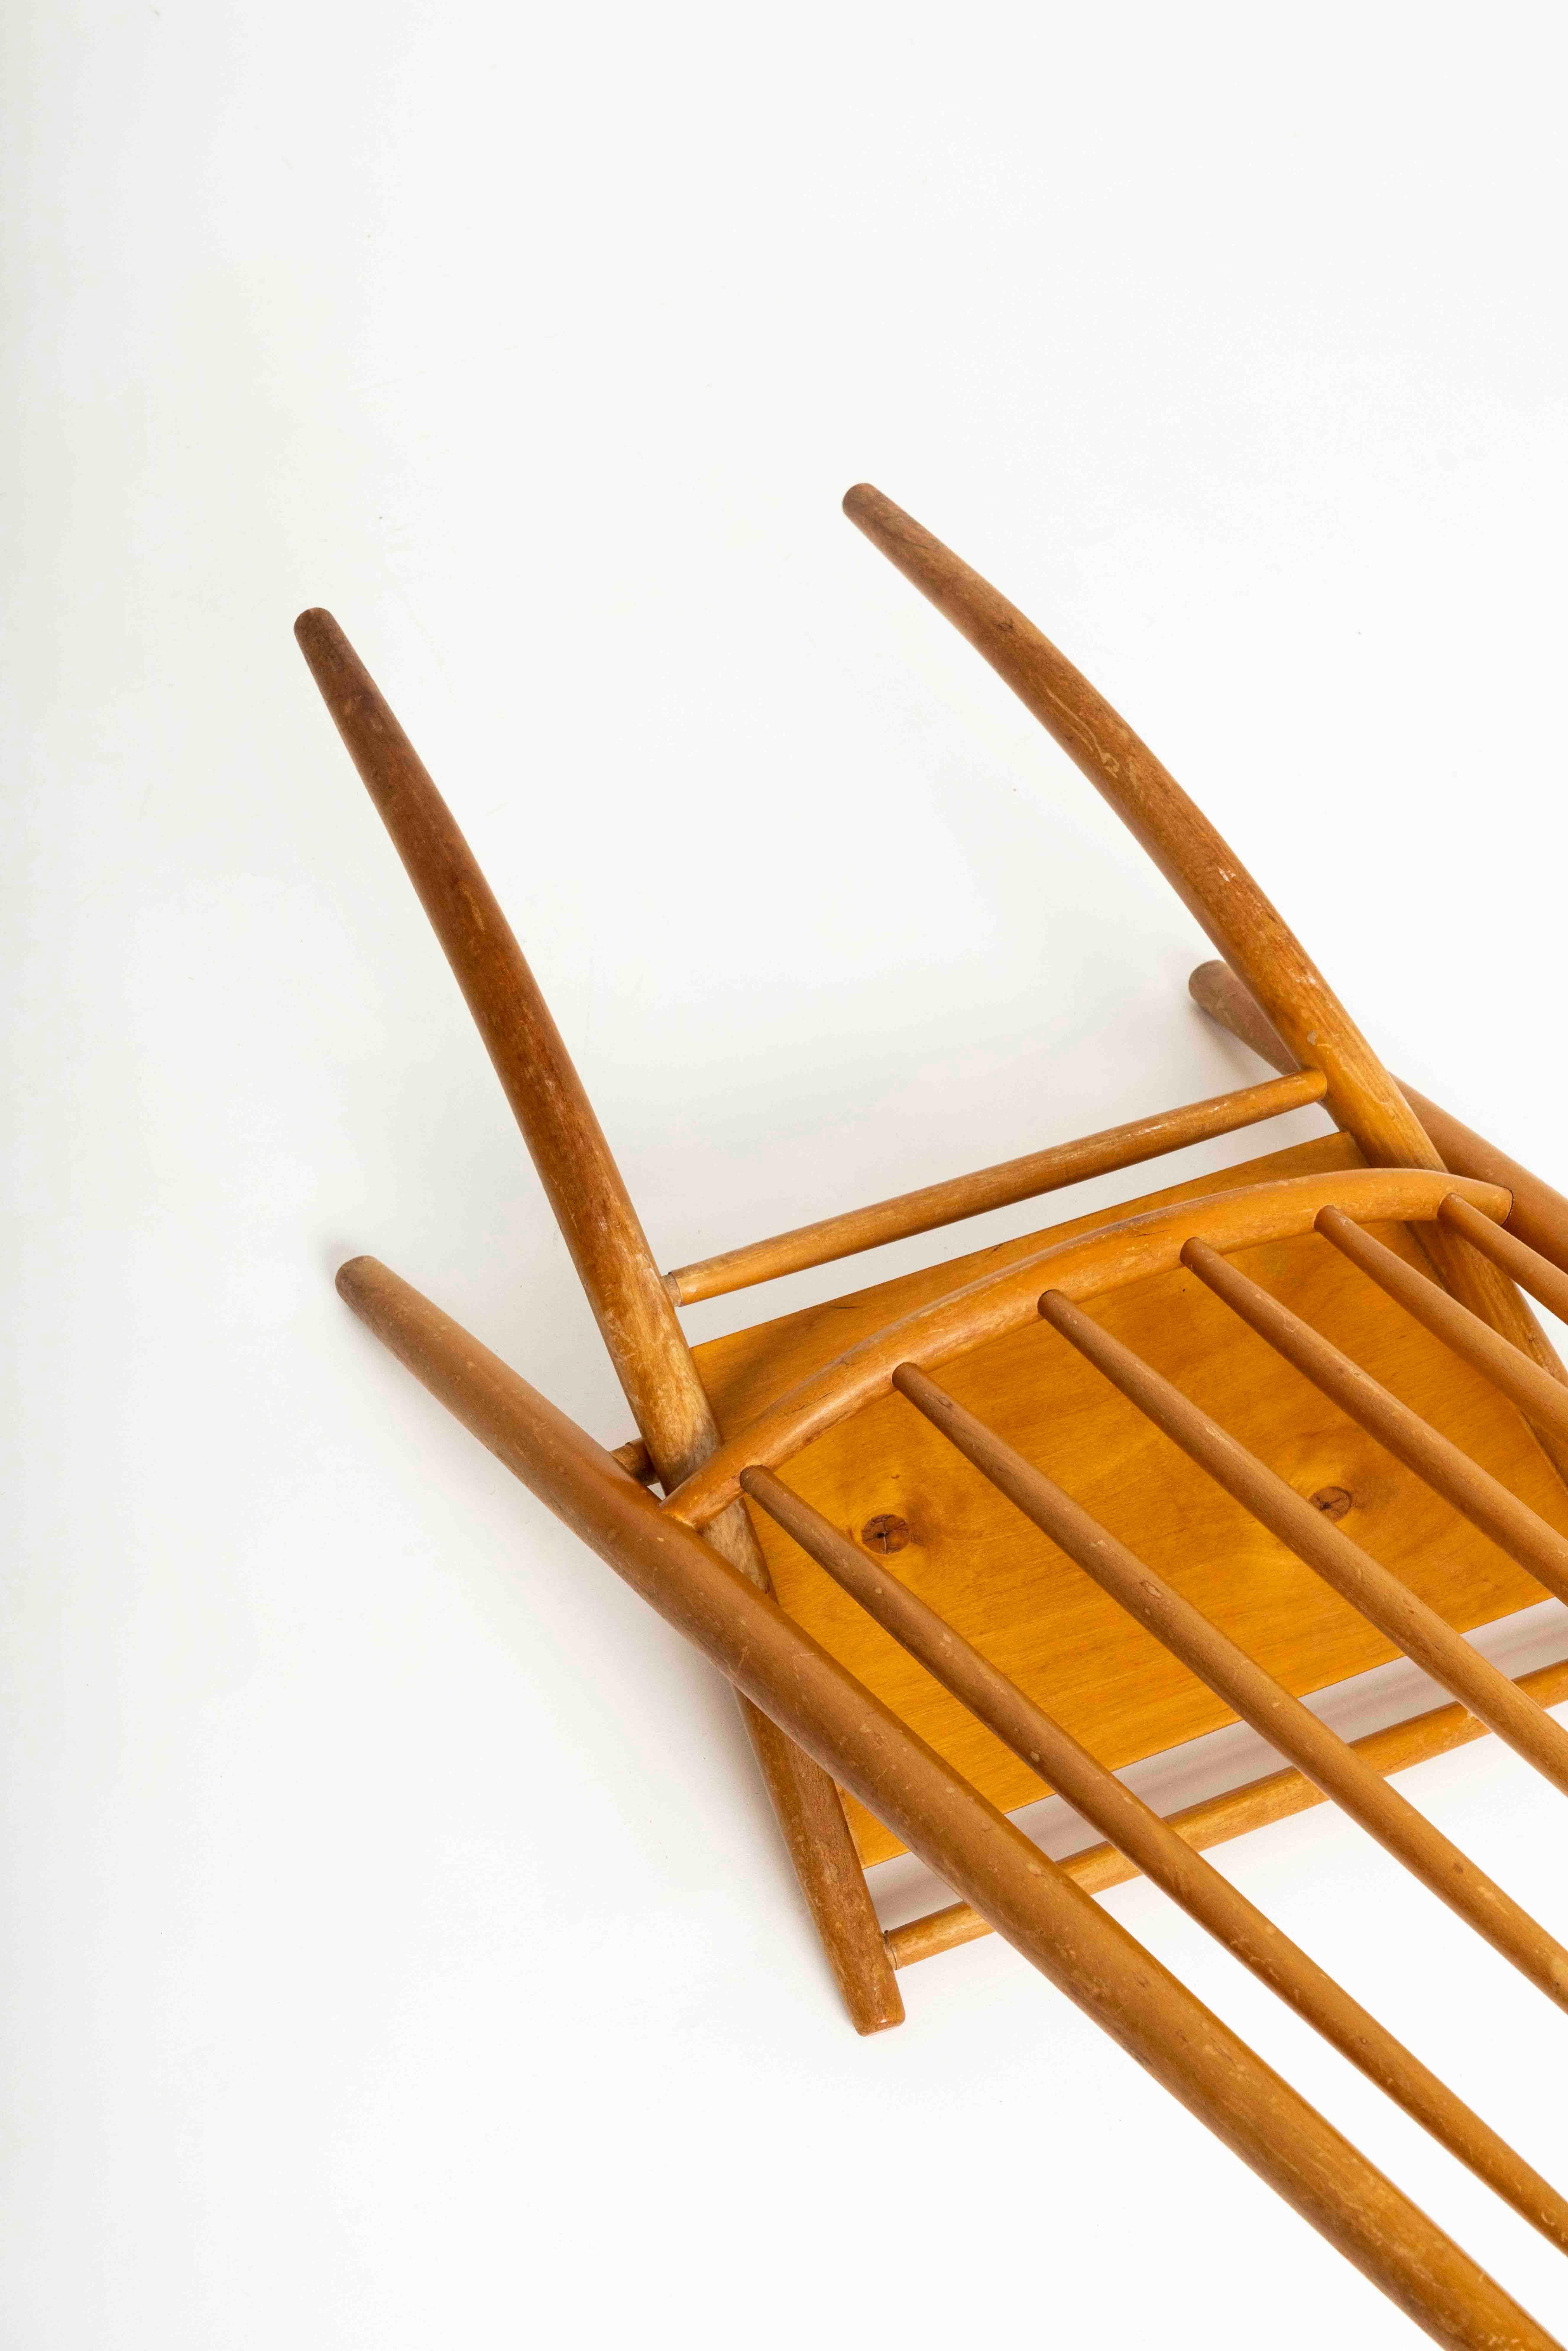 Congo Chair in Birch by Ilmari Tapiovaara for Asko, Finland, 1960s For Sale 2